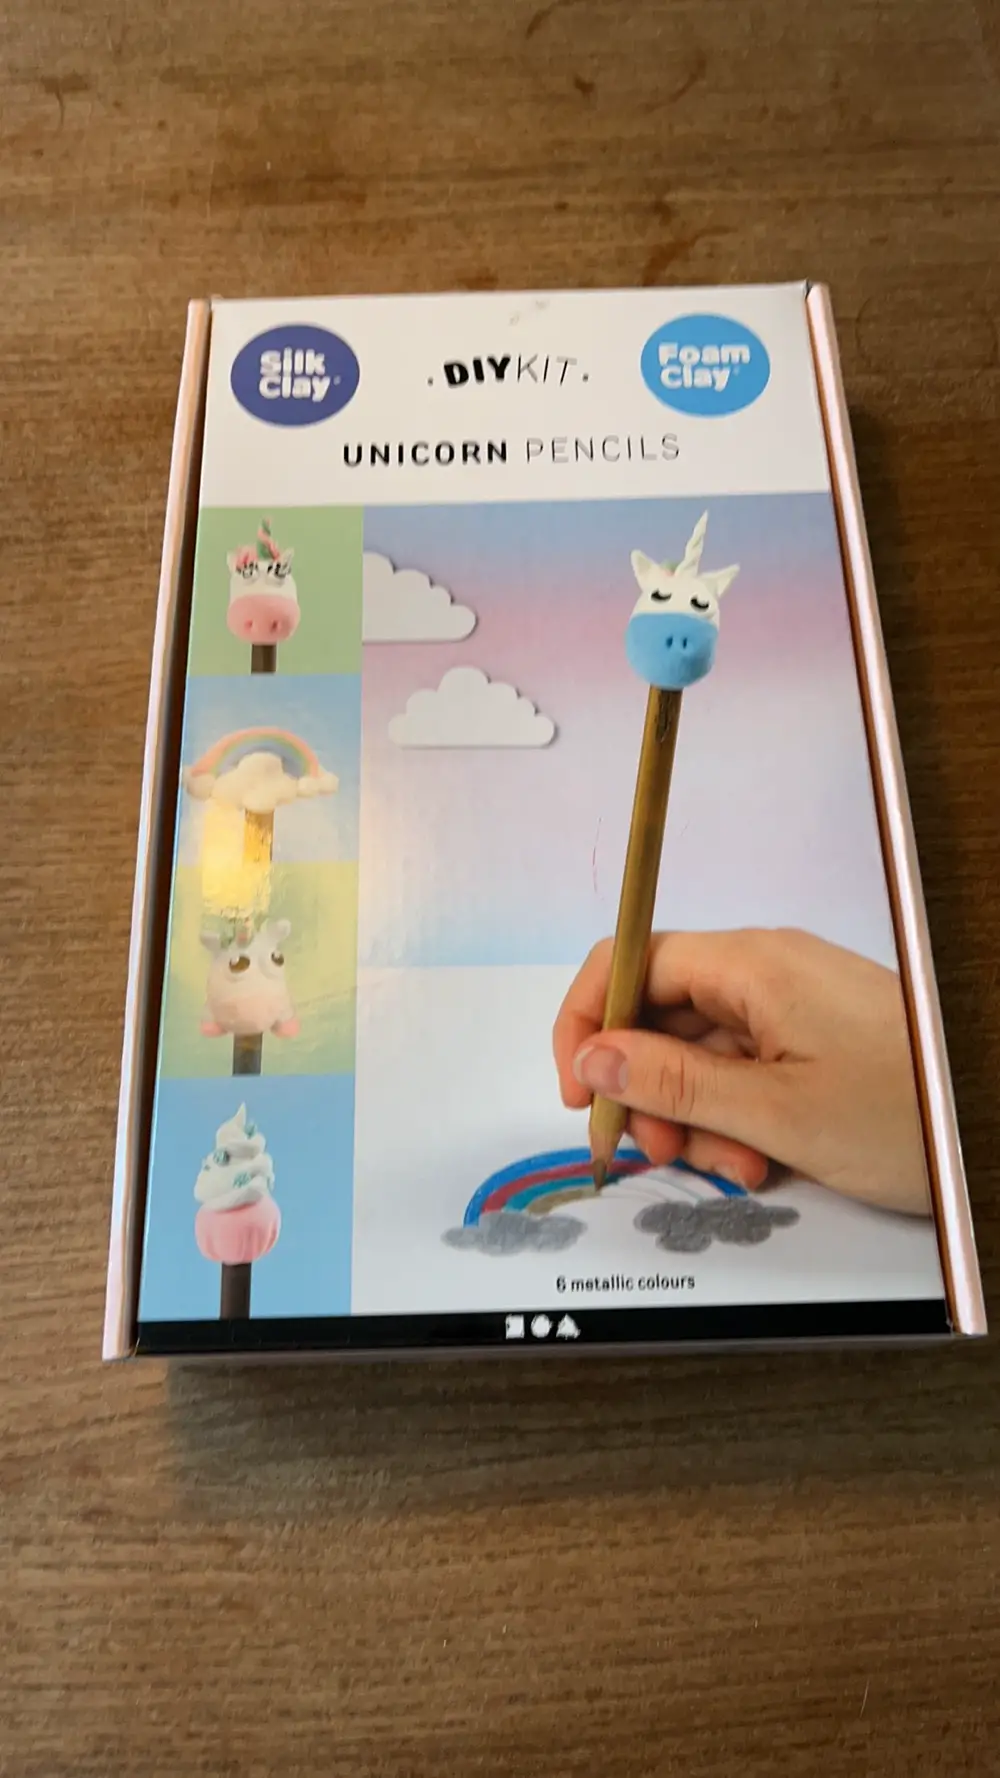 Ukendt Diy kit unicorn pencils